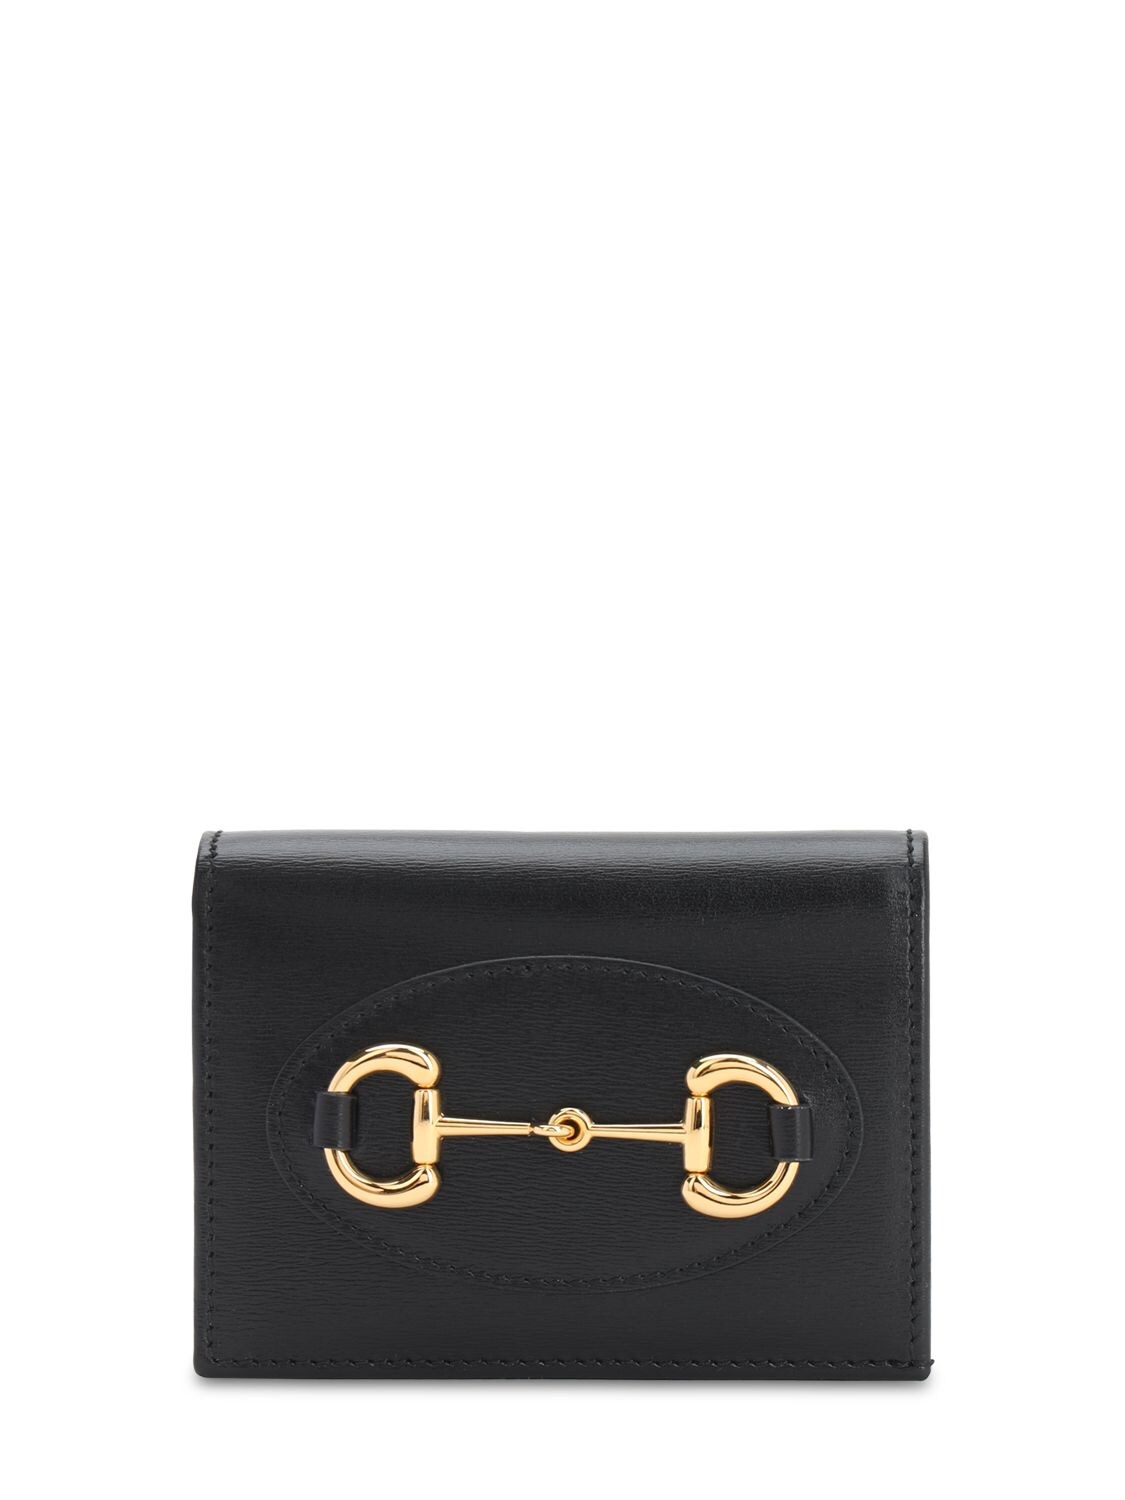 Gucci - 1955 horsebit leather wallet - Black | Luisaviaroma